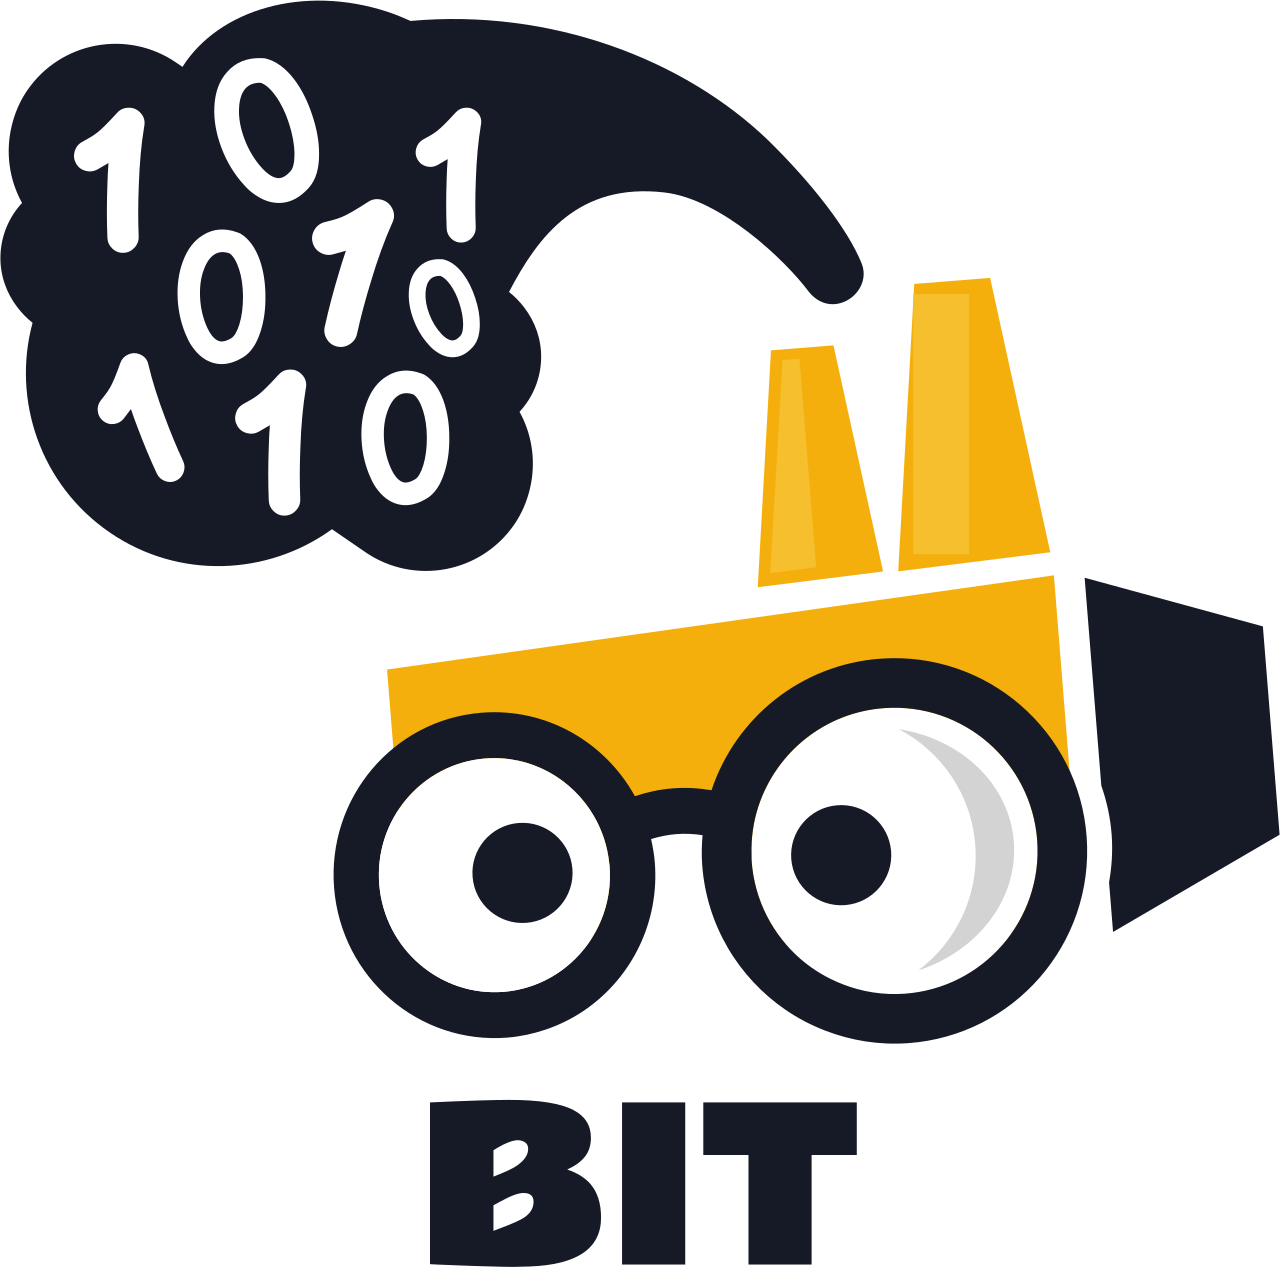 BIT's logo